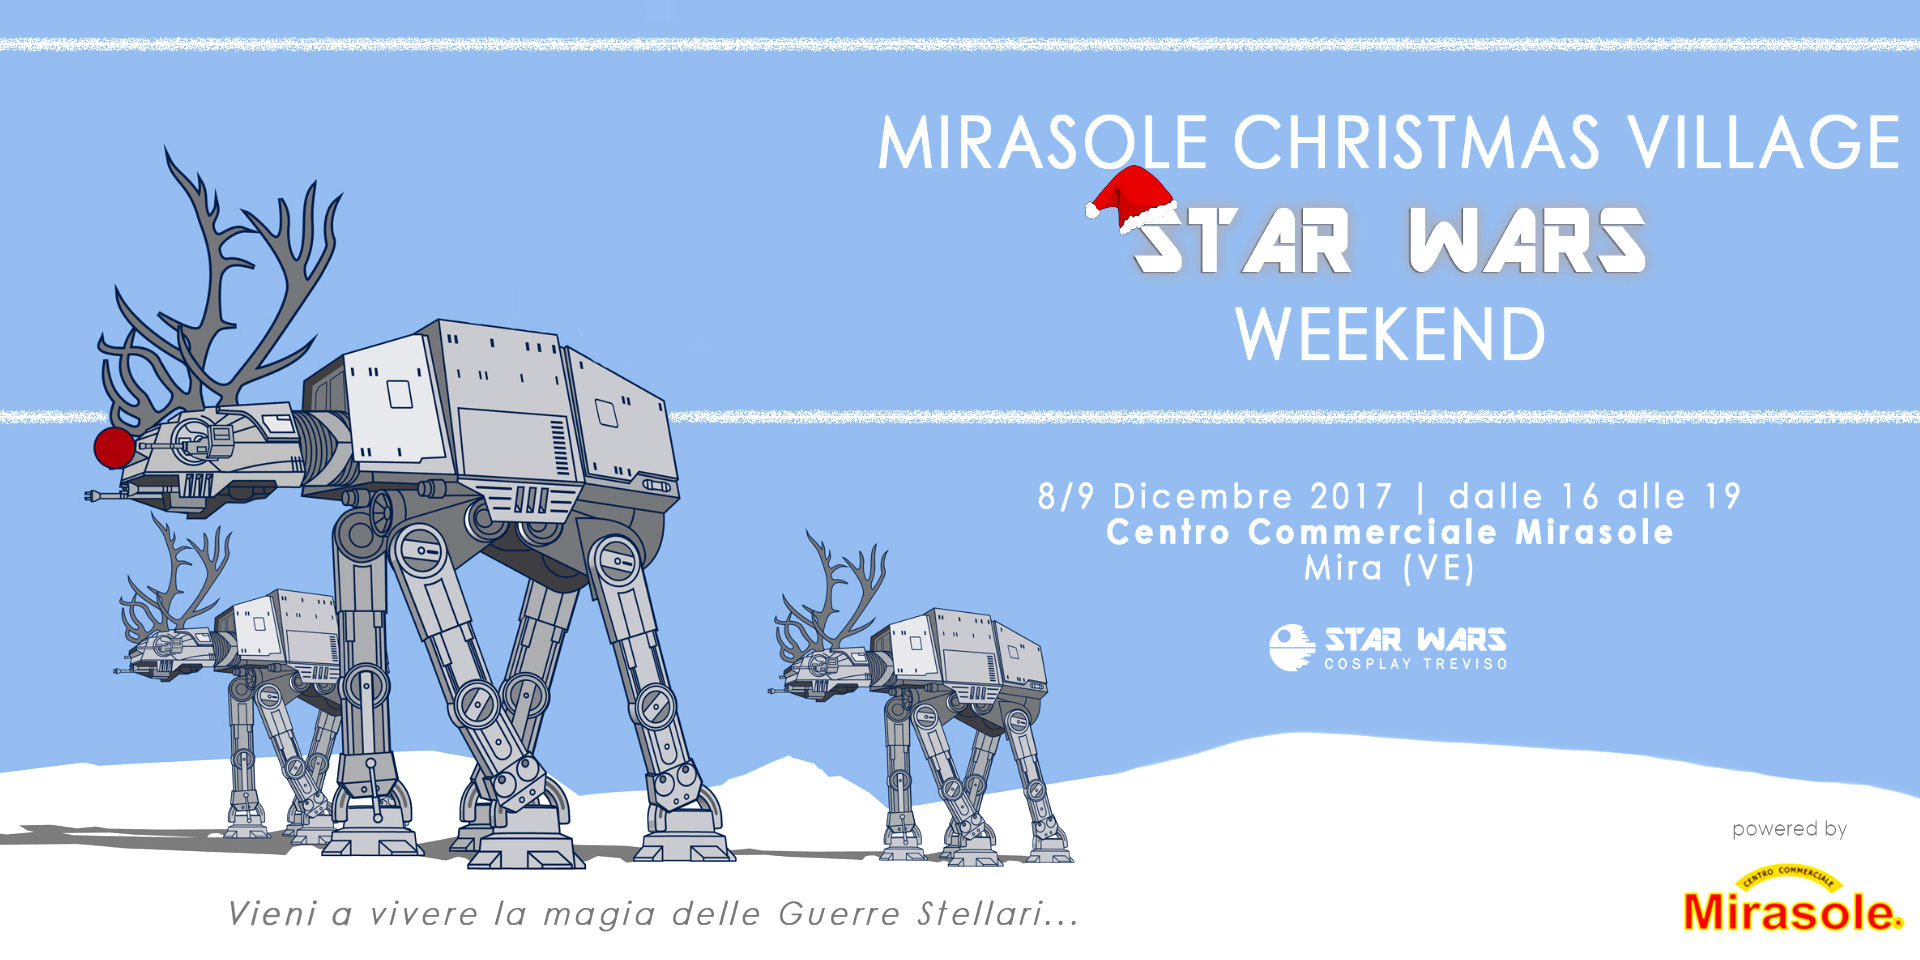 Mirasole Christmas Village Star Wars Weekend